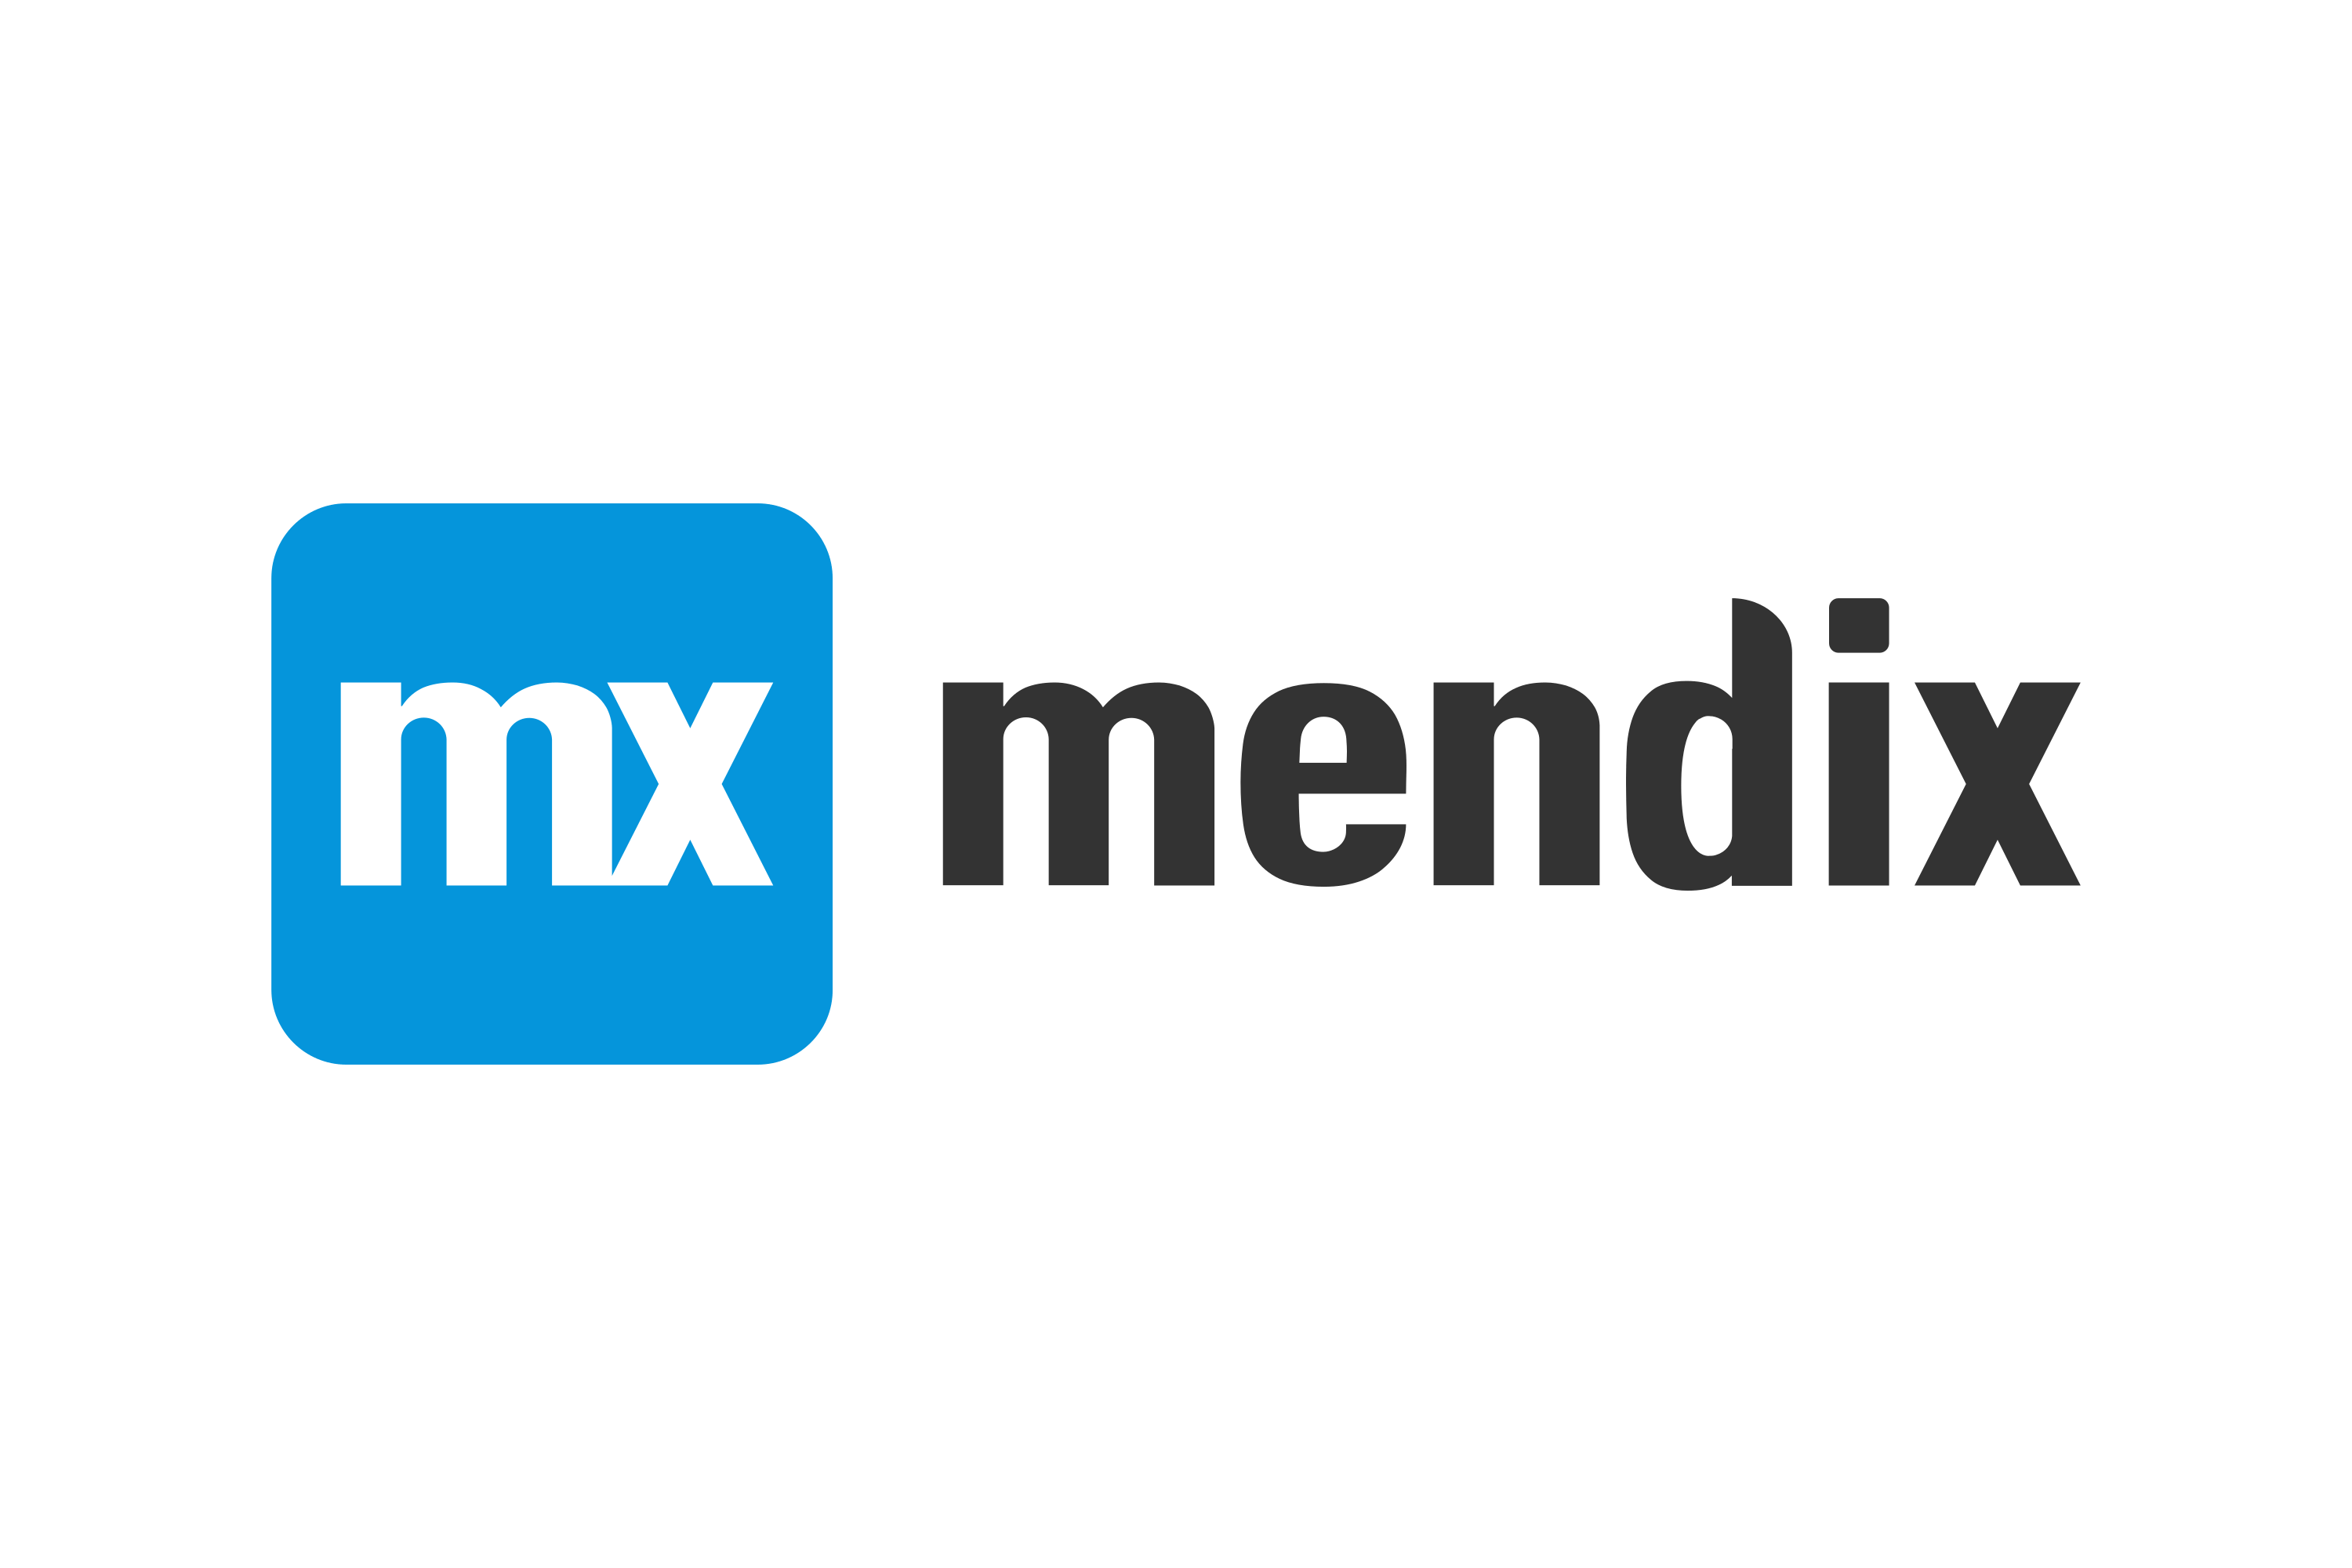 Medix Services